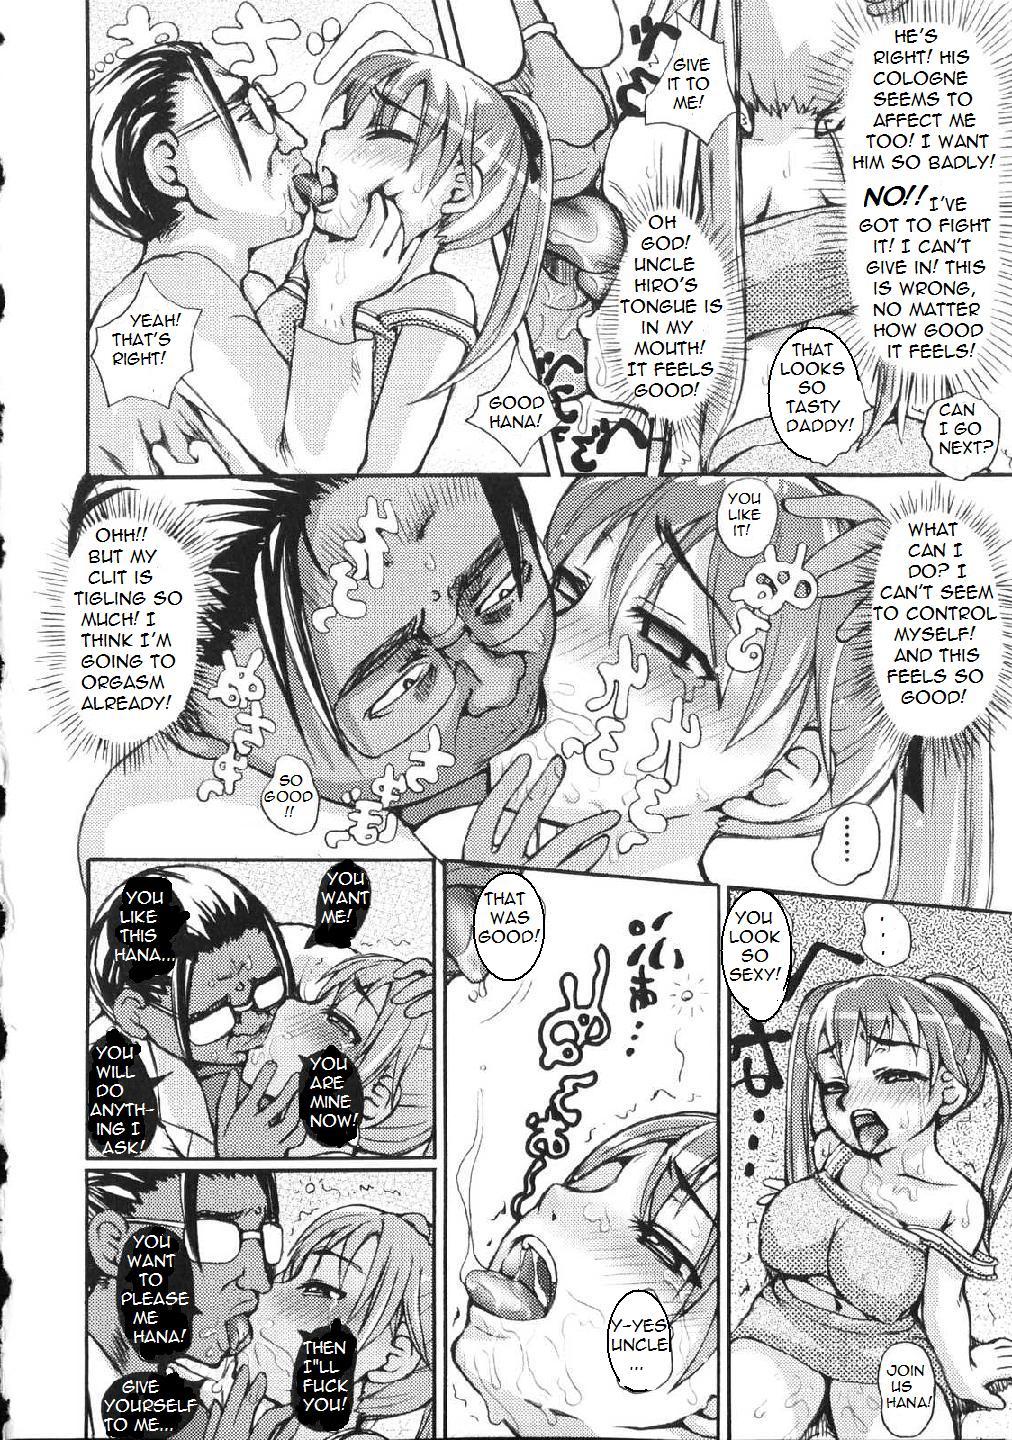 The Smell of Incest 6 hentai manga